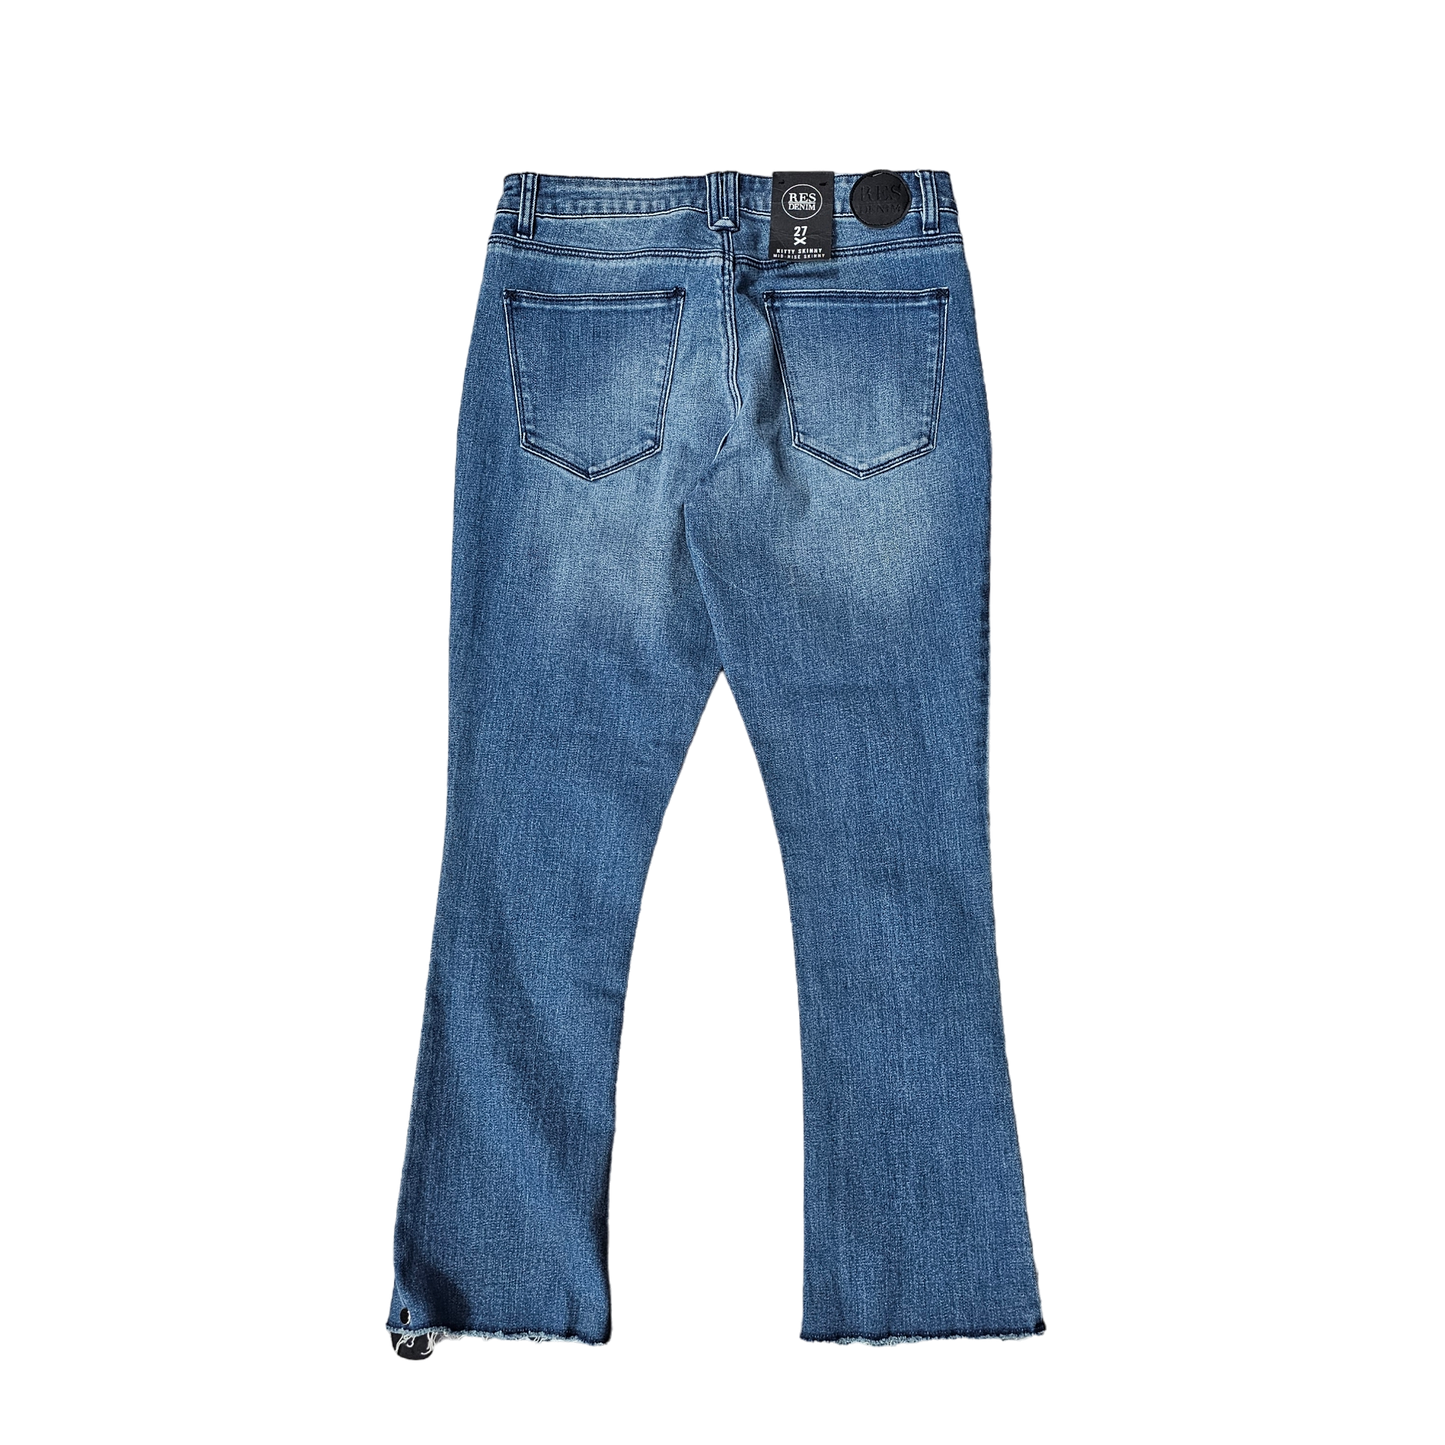 Jeans Skinny By Cmc  Size: 4